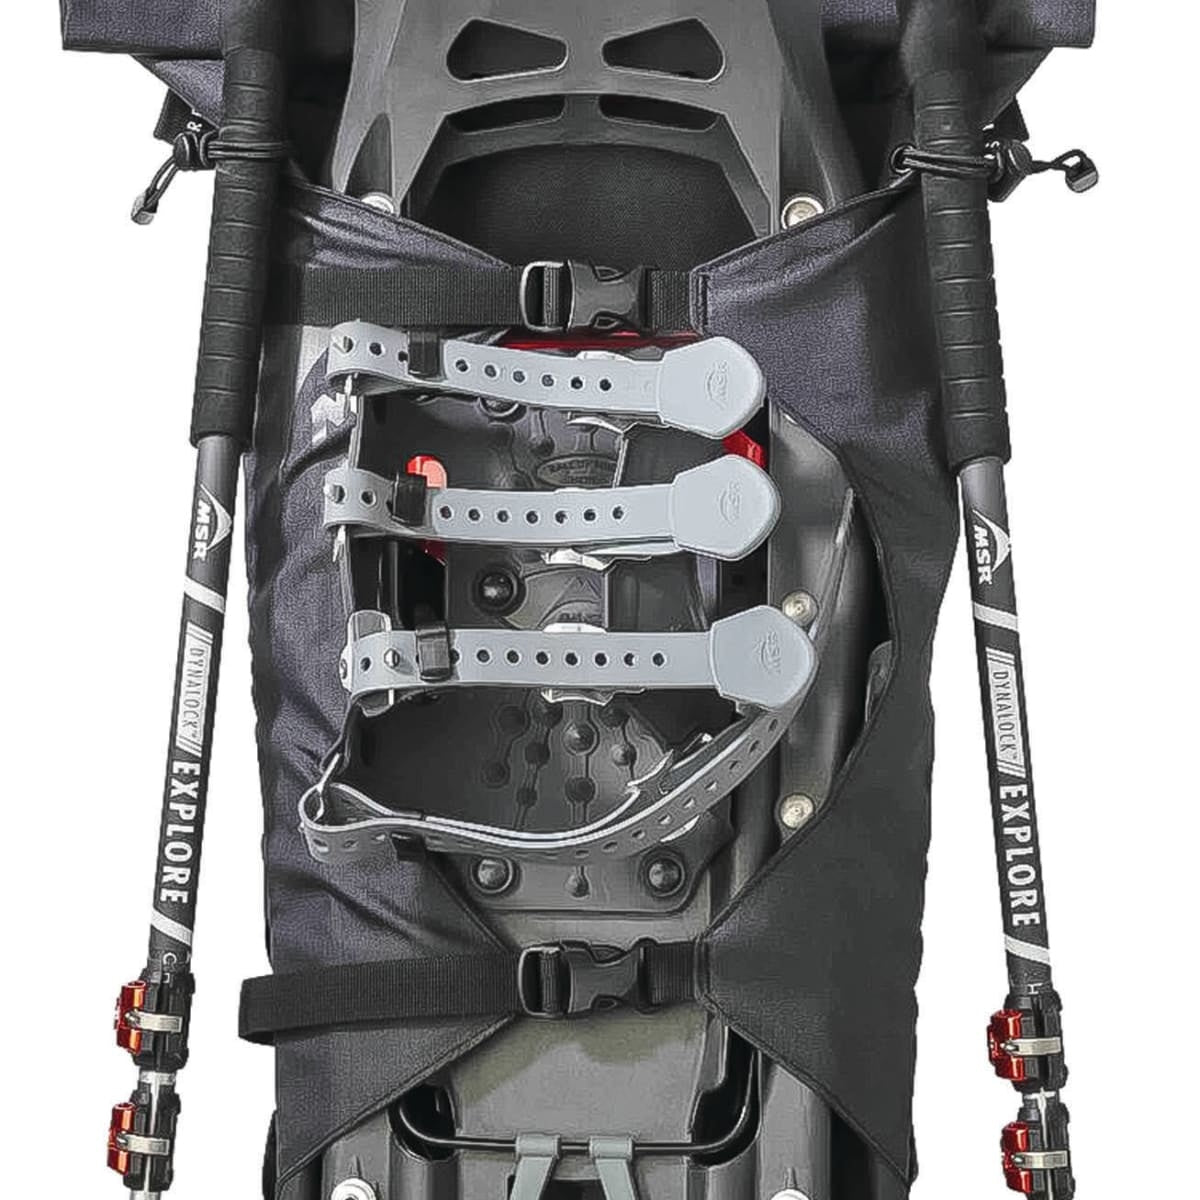 MSR - Evo™ Ascent Snowshoe Kit